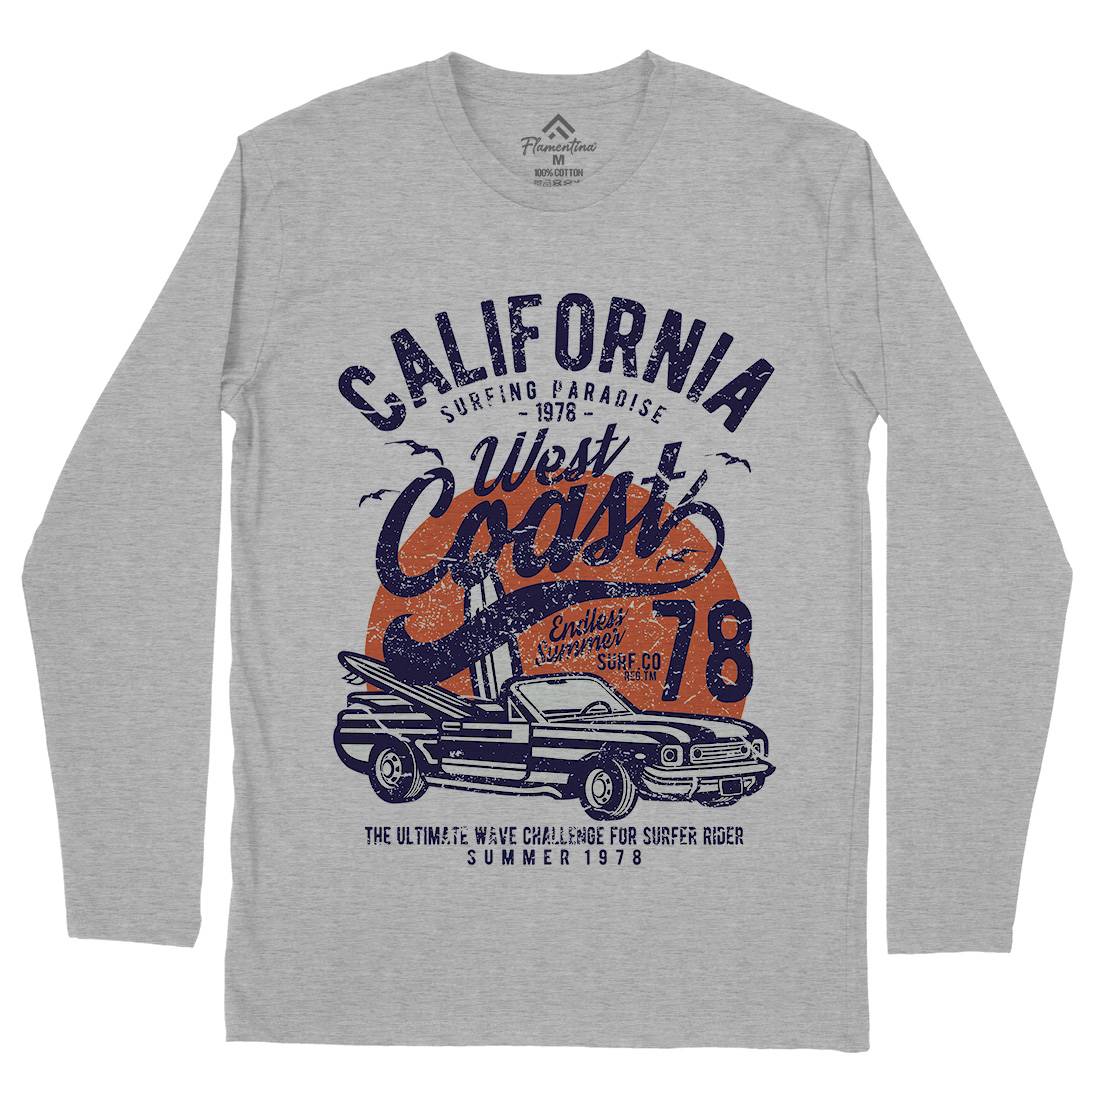 California West Coast Mens Long Sleeve T-Shirt Nature A028